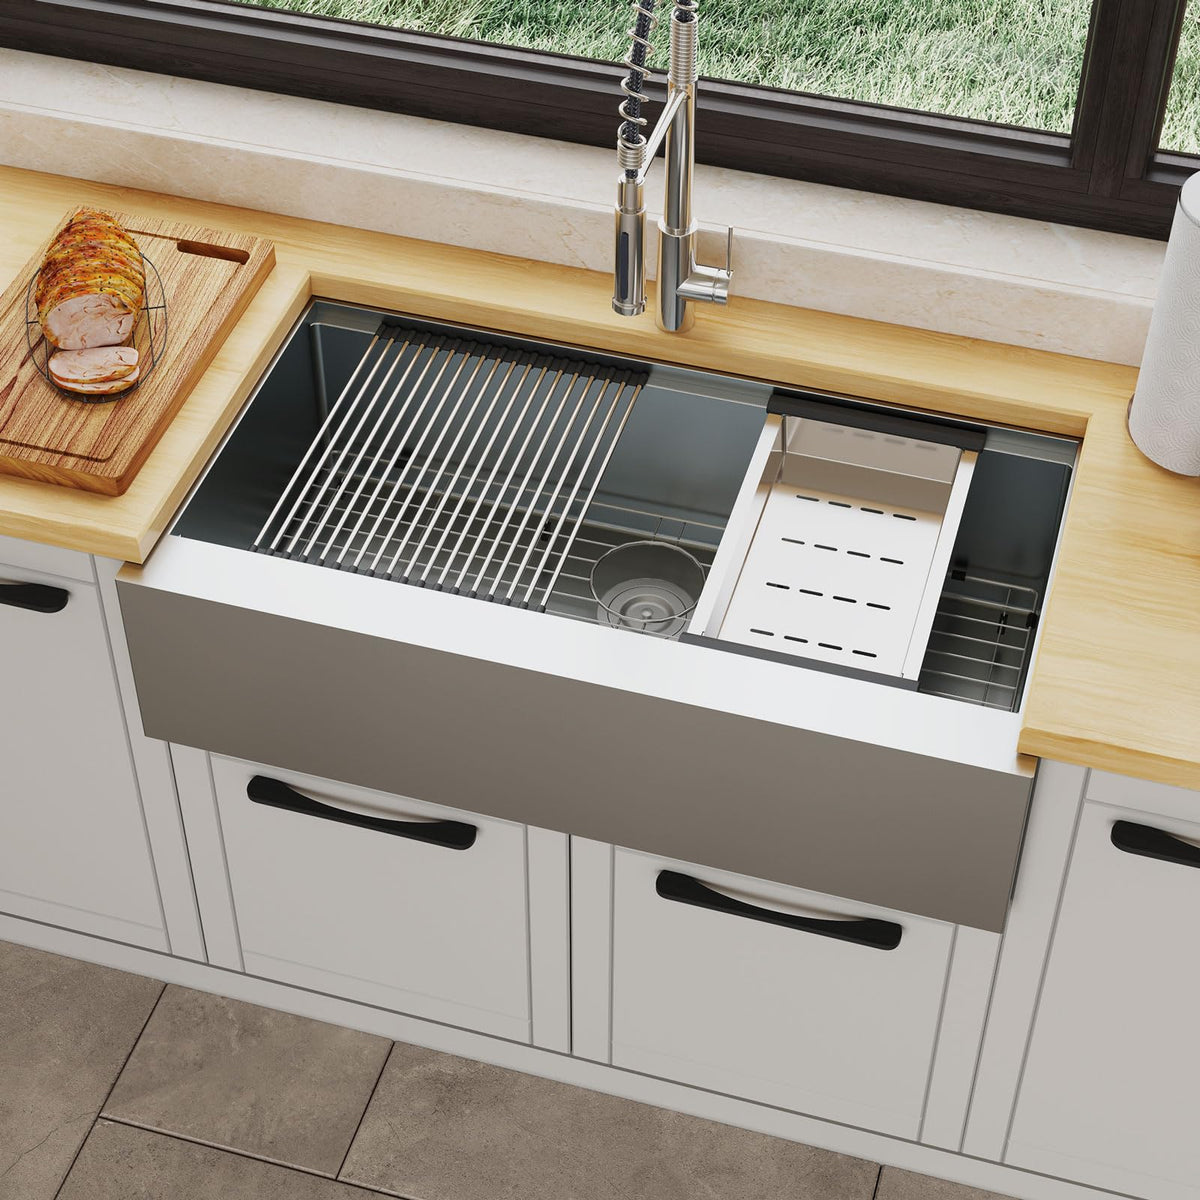 TECASA Flat Apron Front 16 Gauge Stainless Steel Kitchen Sink-36 inch Workstation Farmhouse Sink